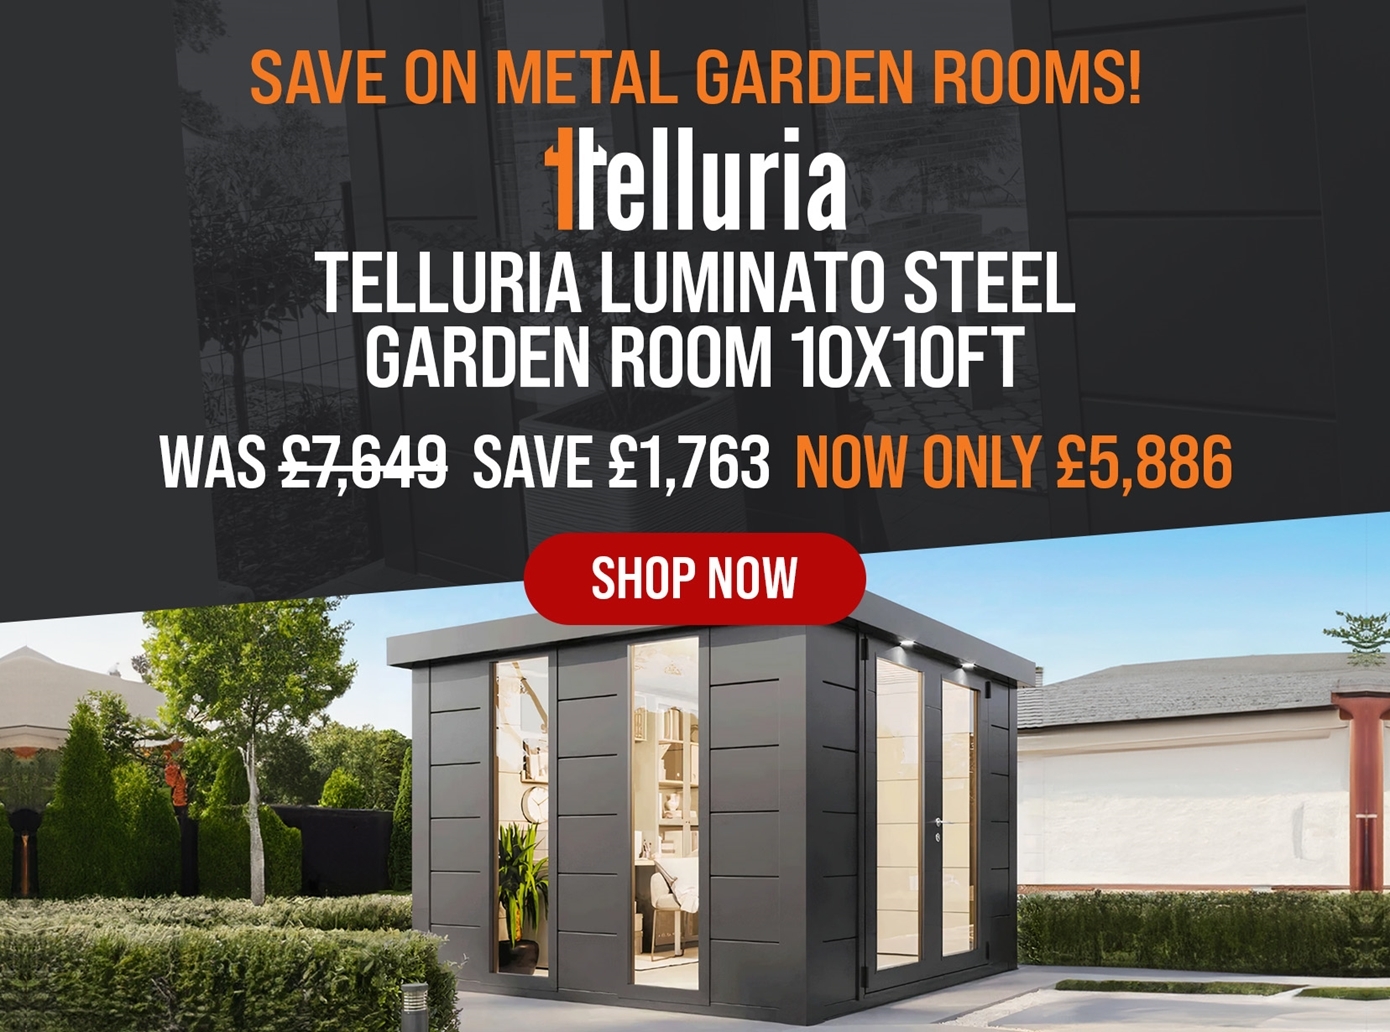 save on metal garden rooms! telluria luminato steel garden room 10x10ft